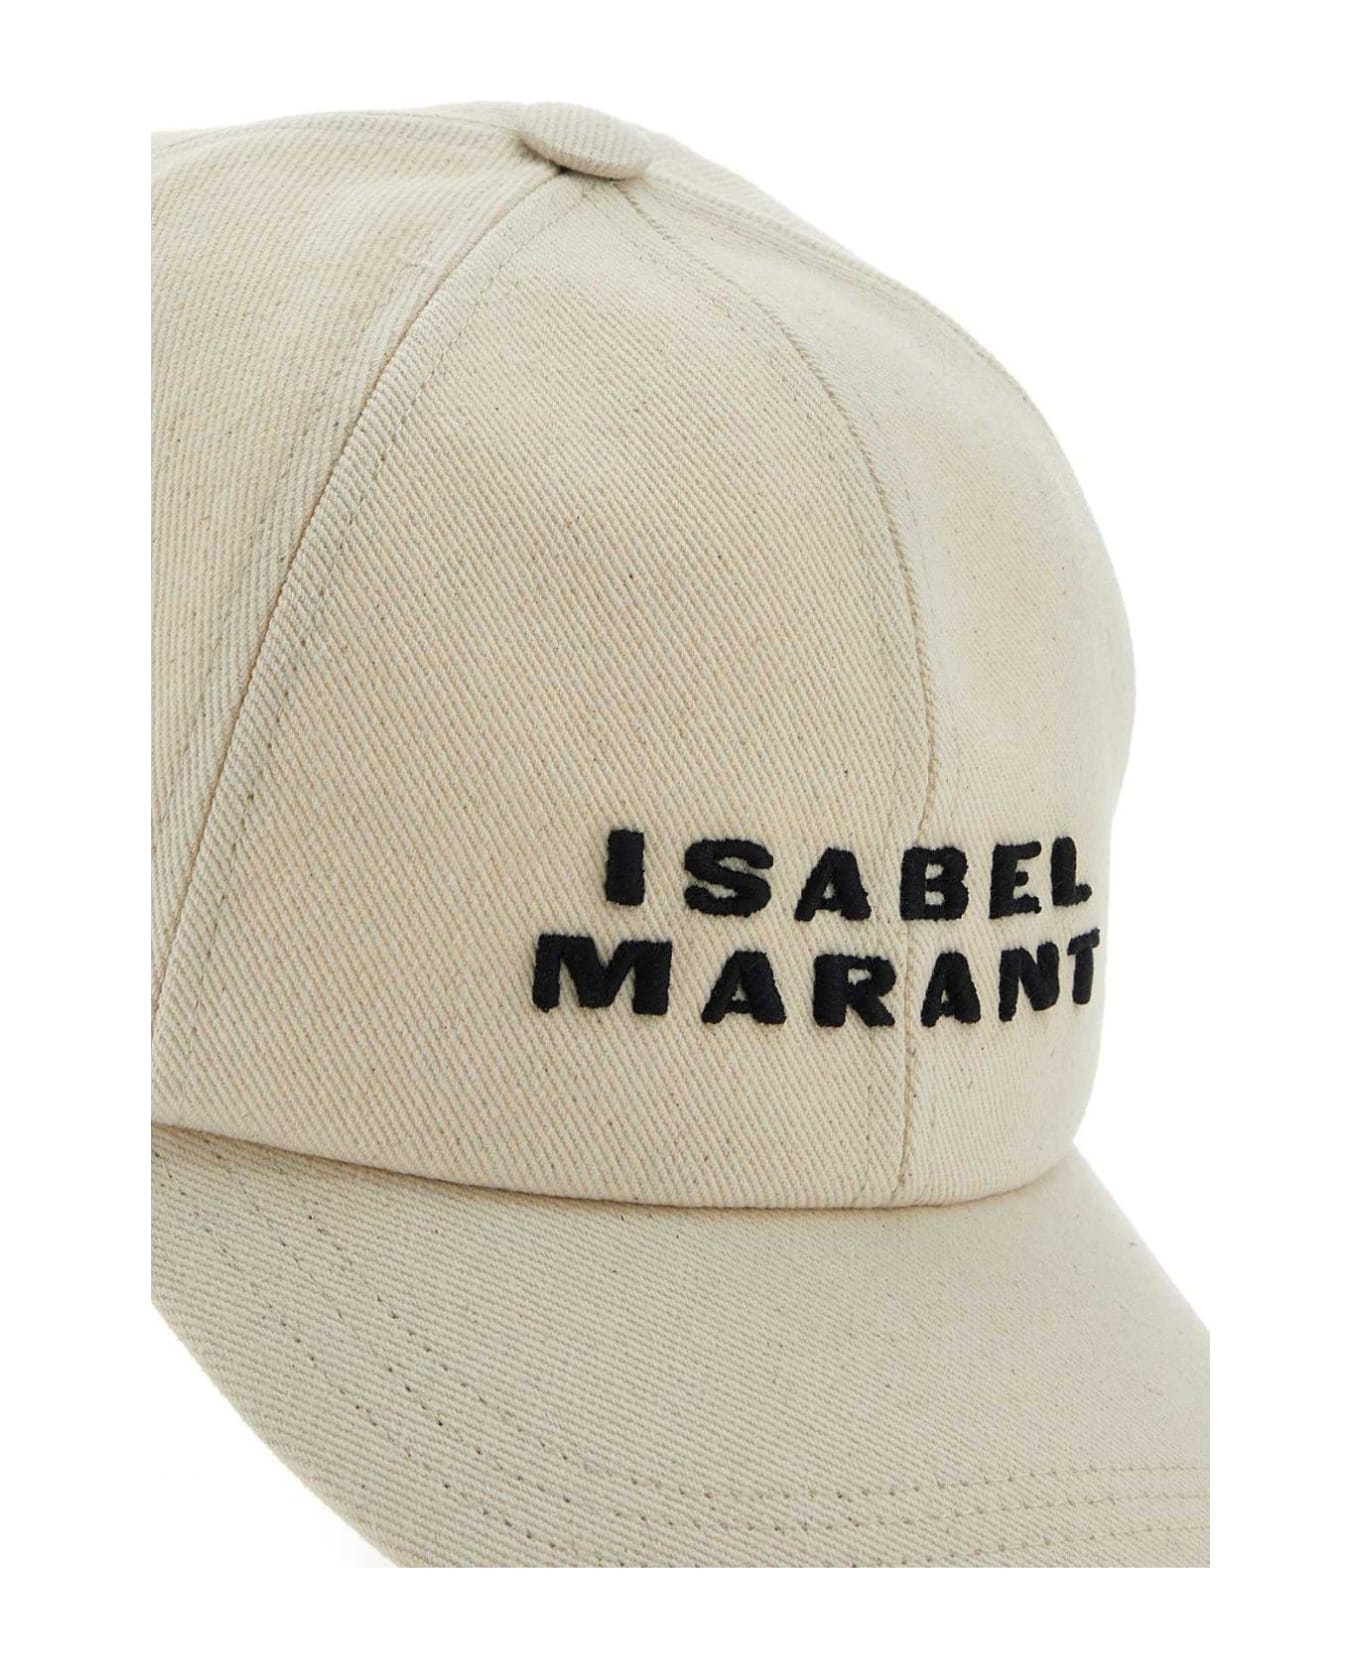 Isabel Marant Baseball Cap - Ecbk Ecru Black 帽子